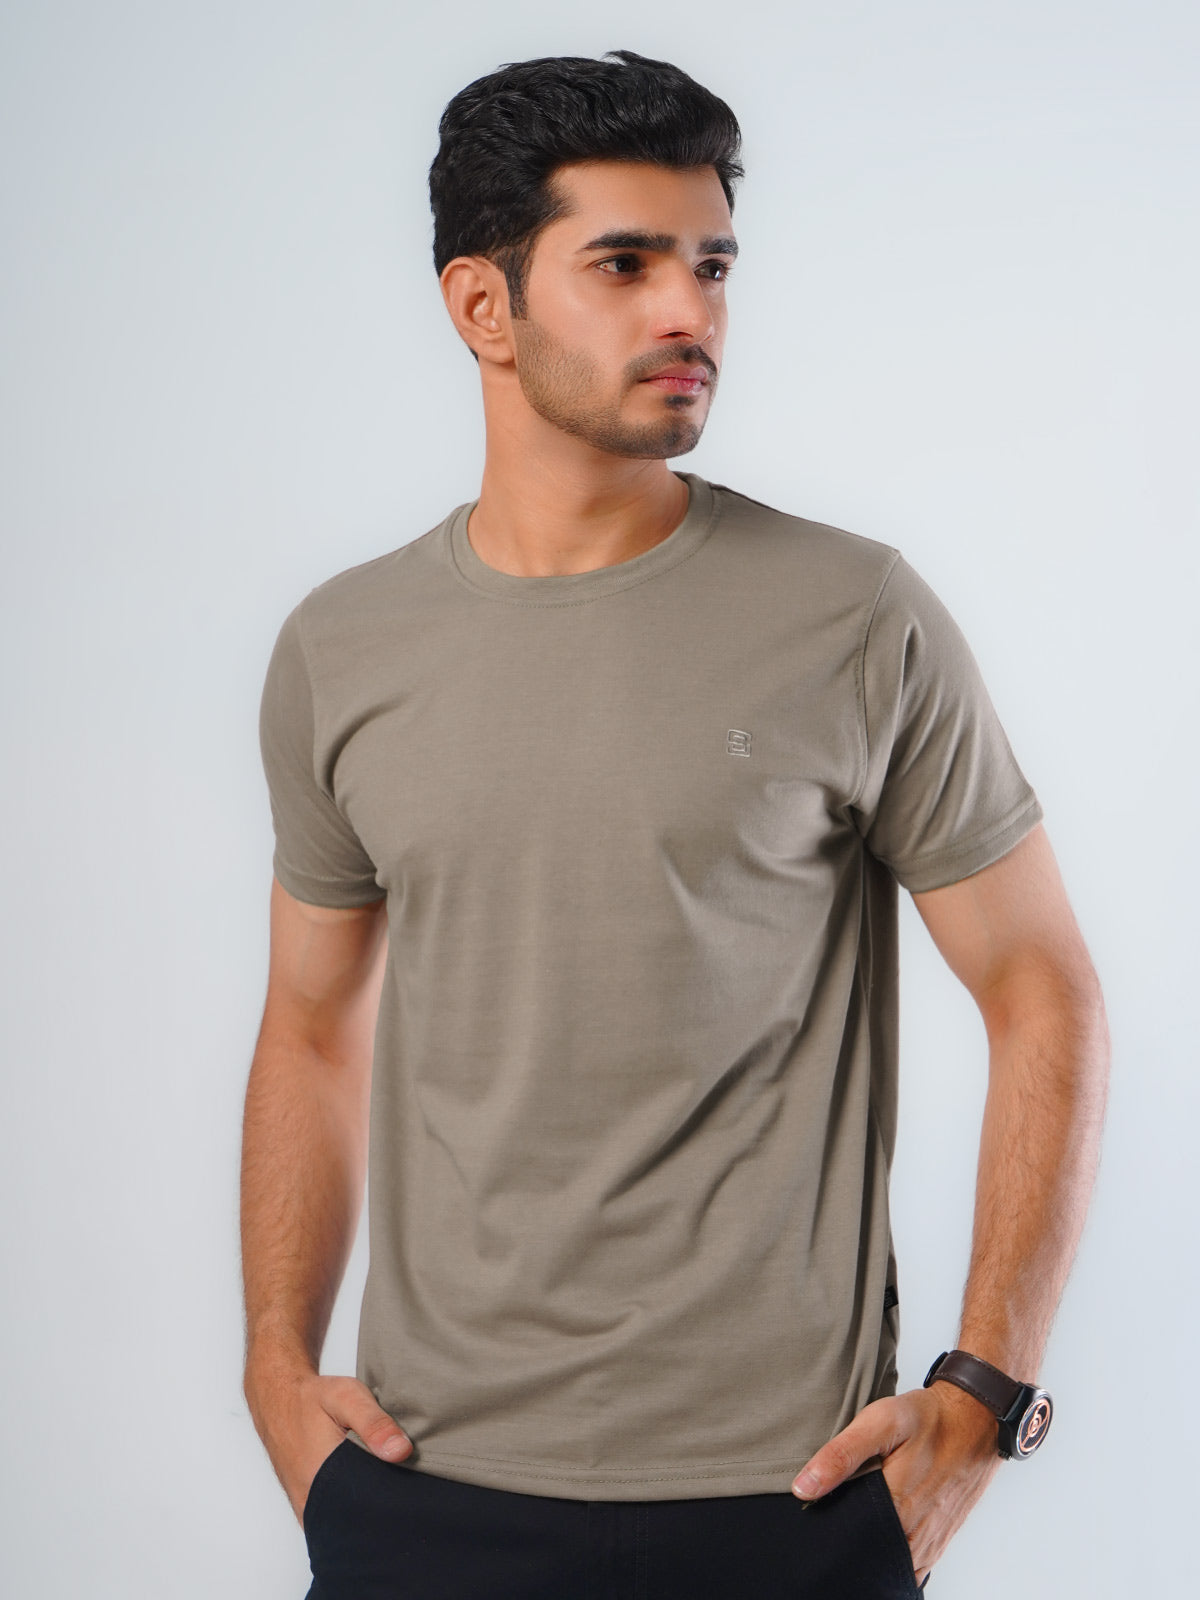 Blank Tshirts Half Sleeves at Rs 161/piece